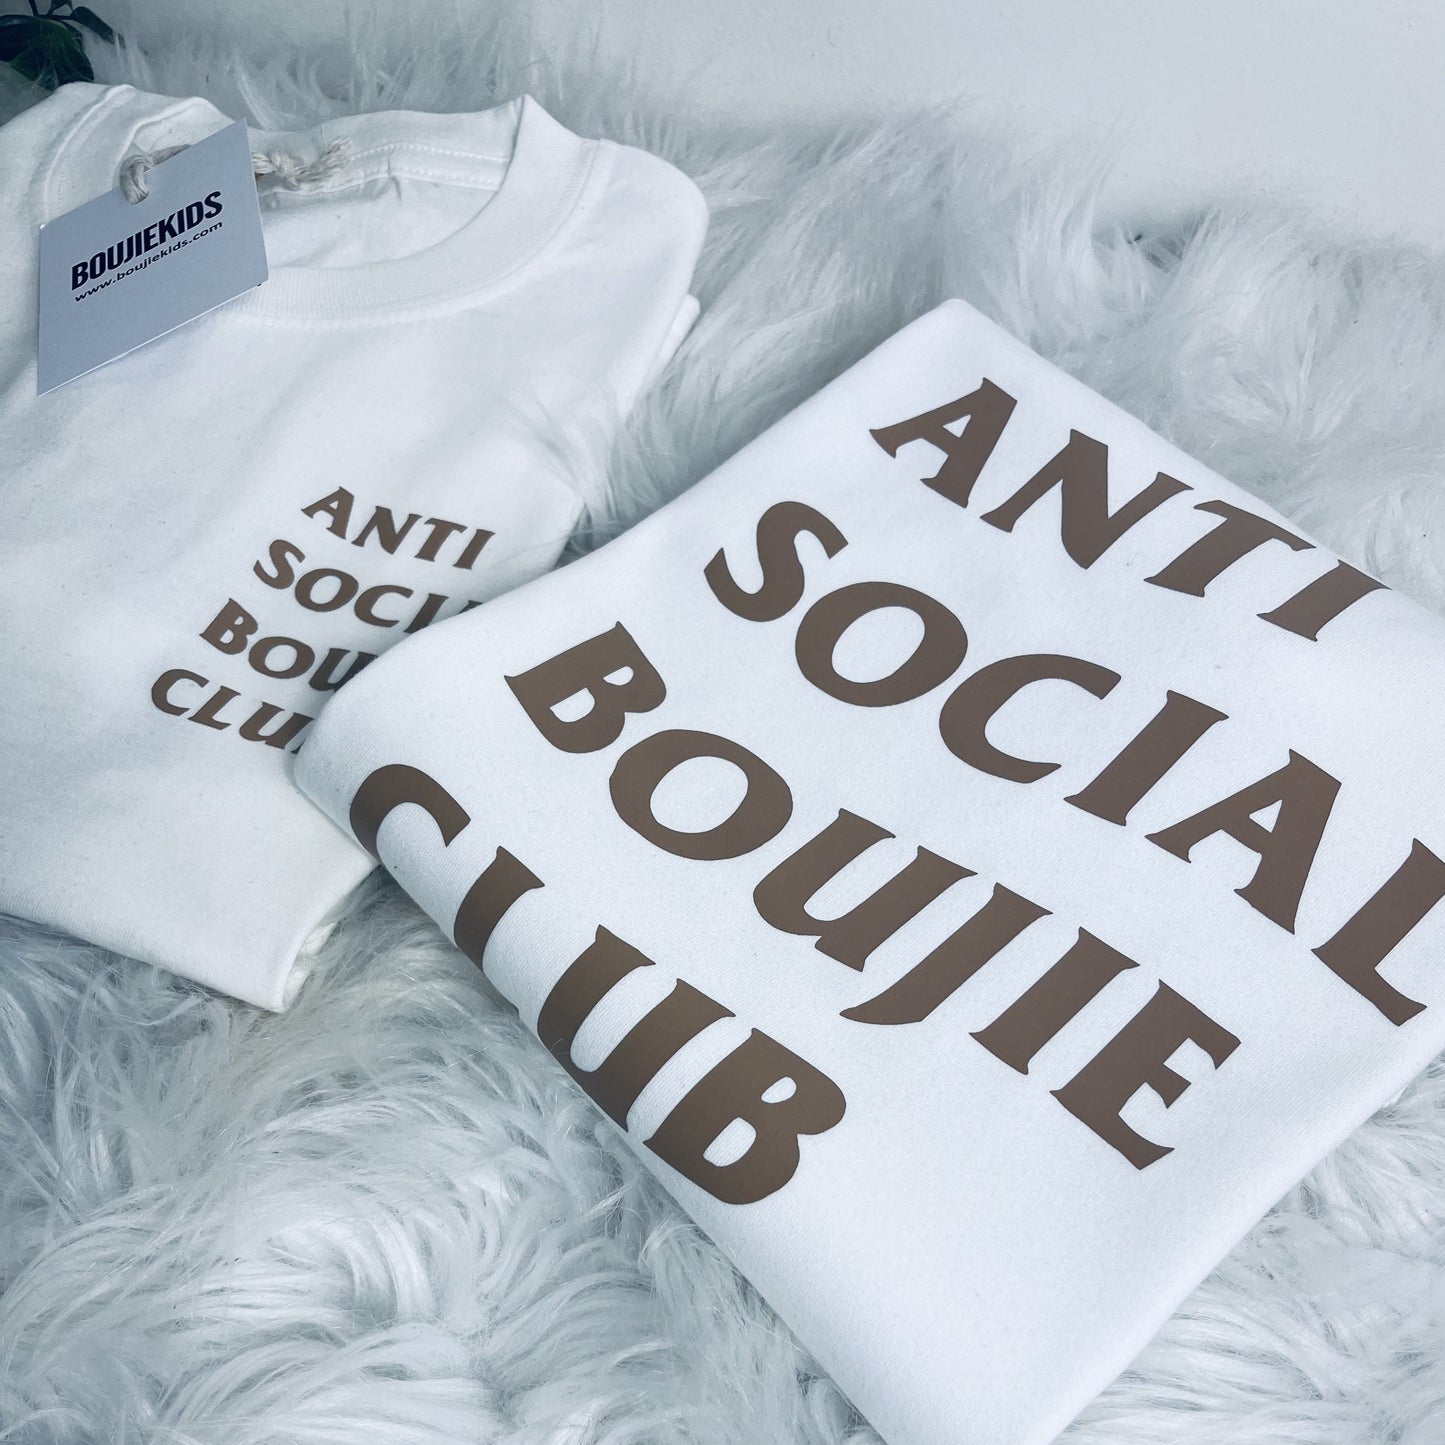 Anti Social Boujie Club T shirt